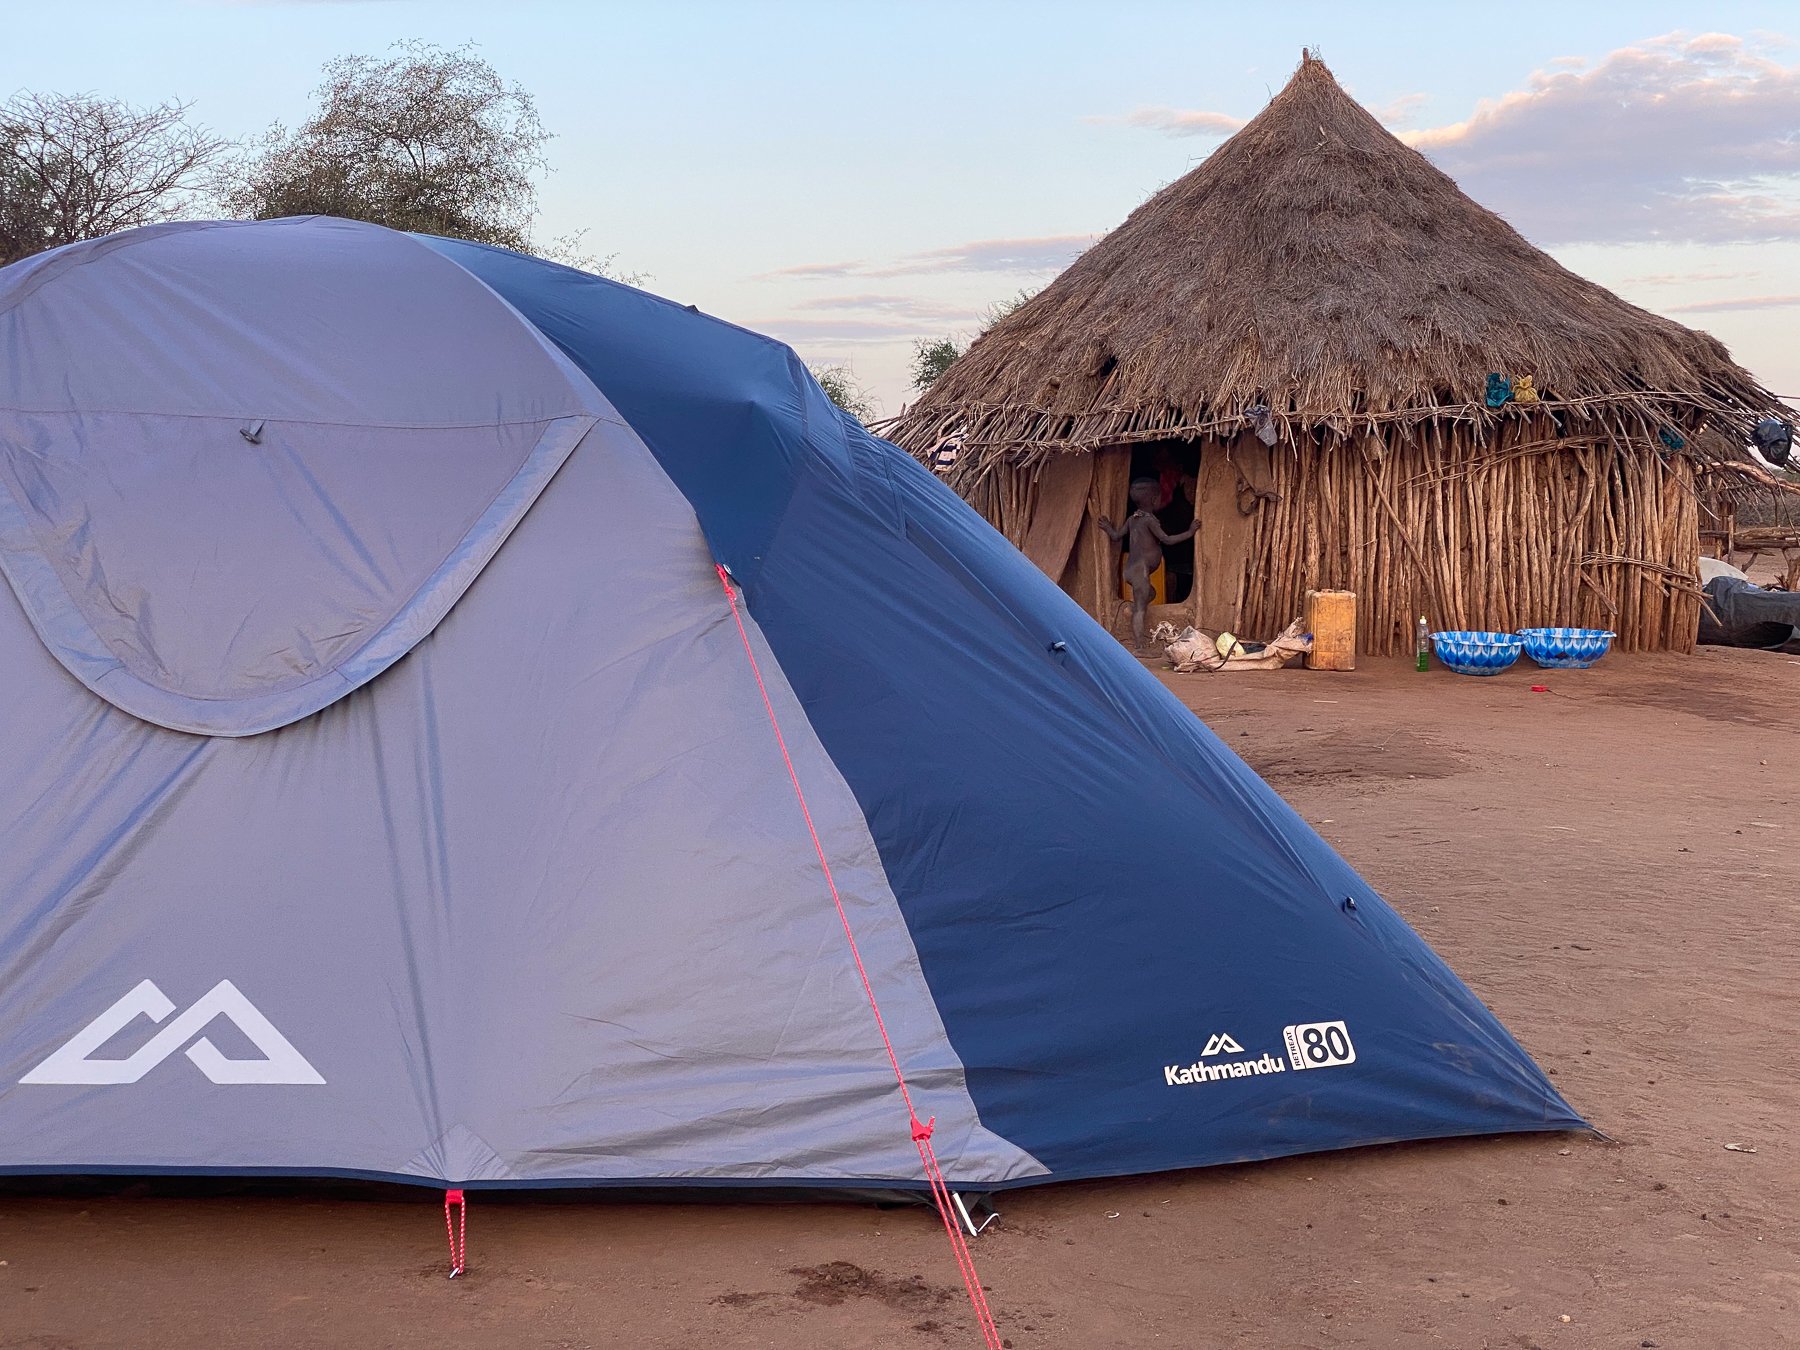 Omo Valley camping tour tent Ethiopia